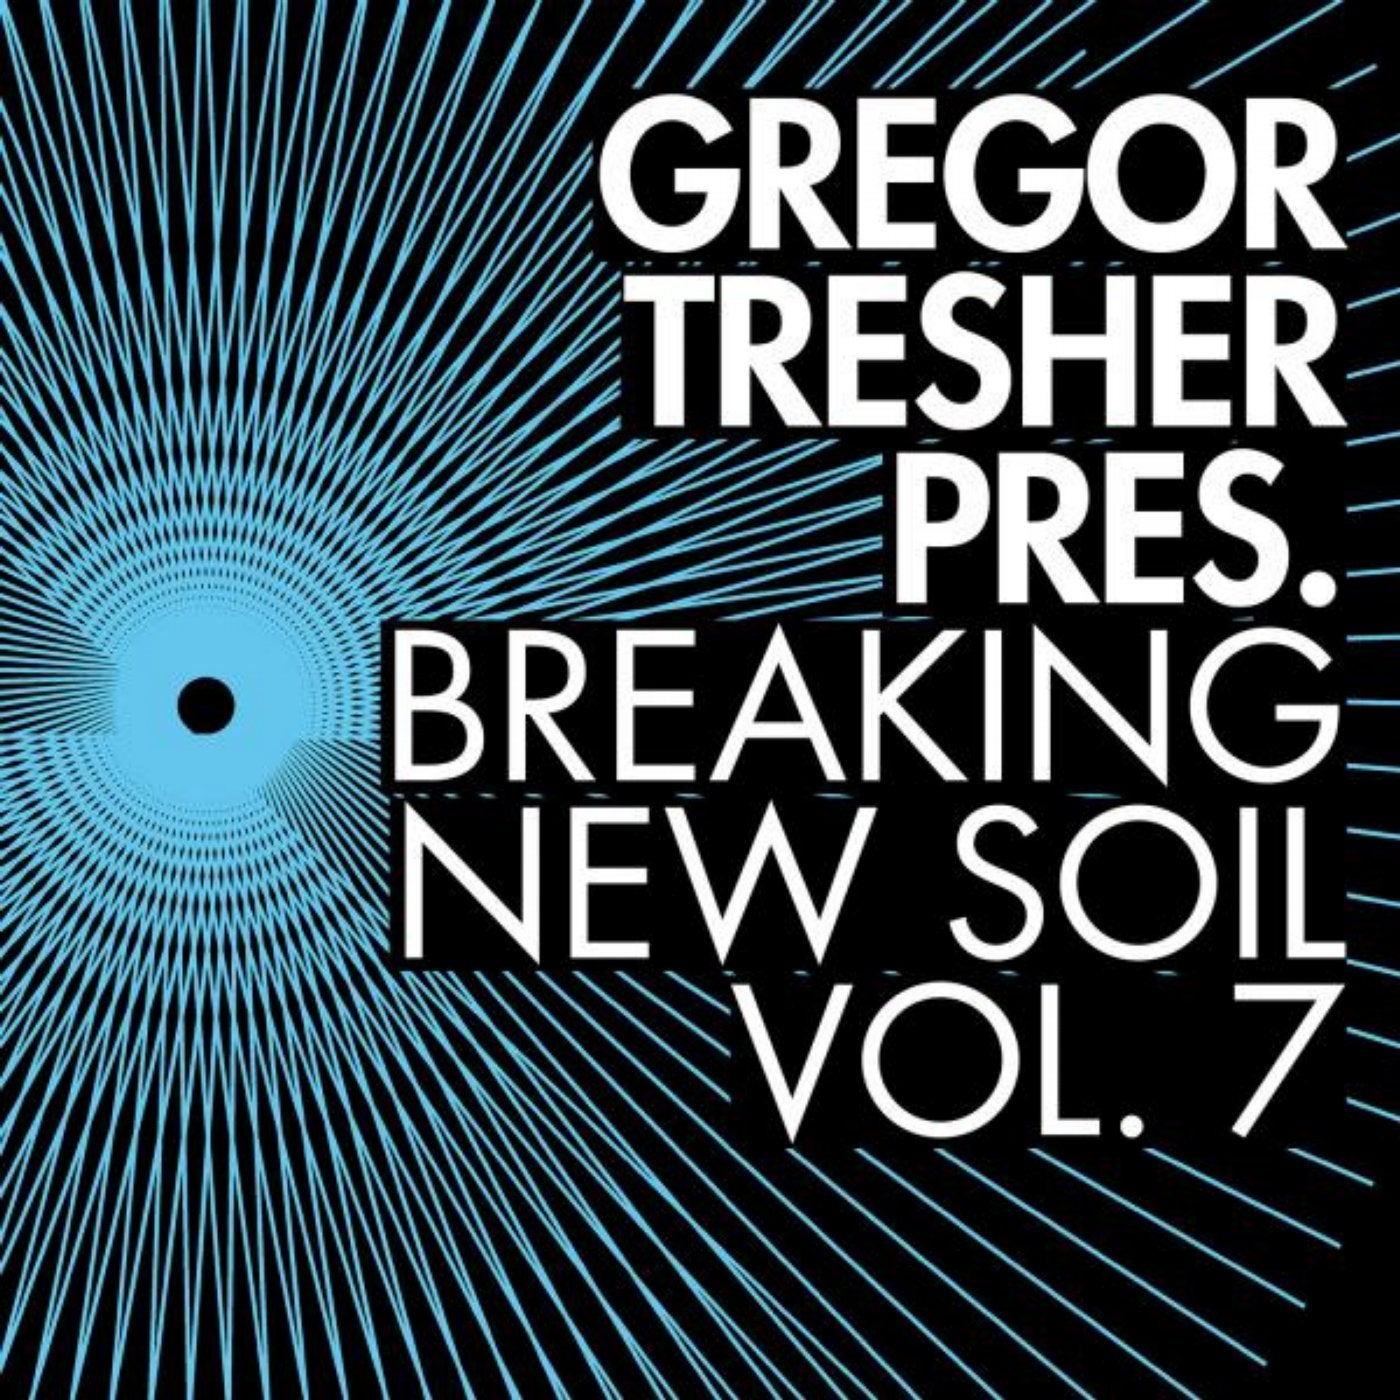 Gregor Tresher Presents Breaking New Soil, Vol. 7